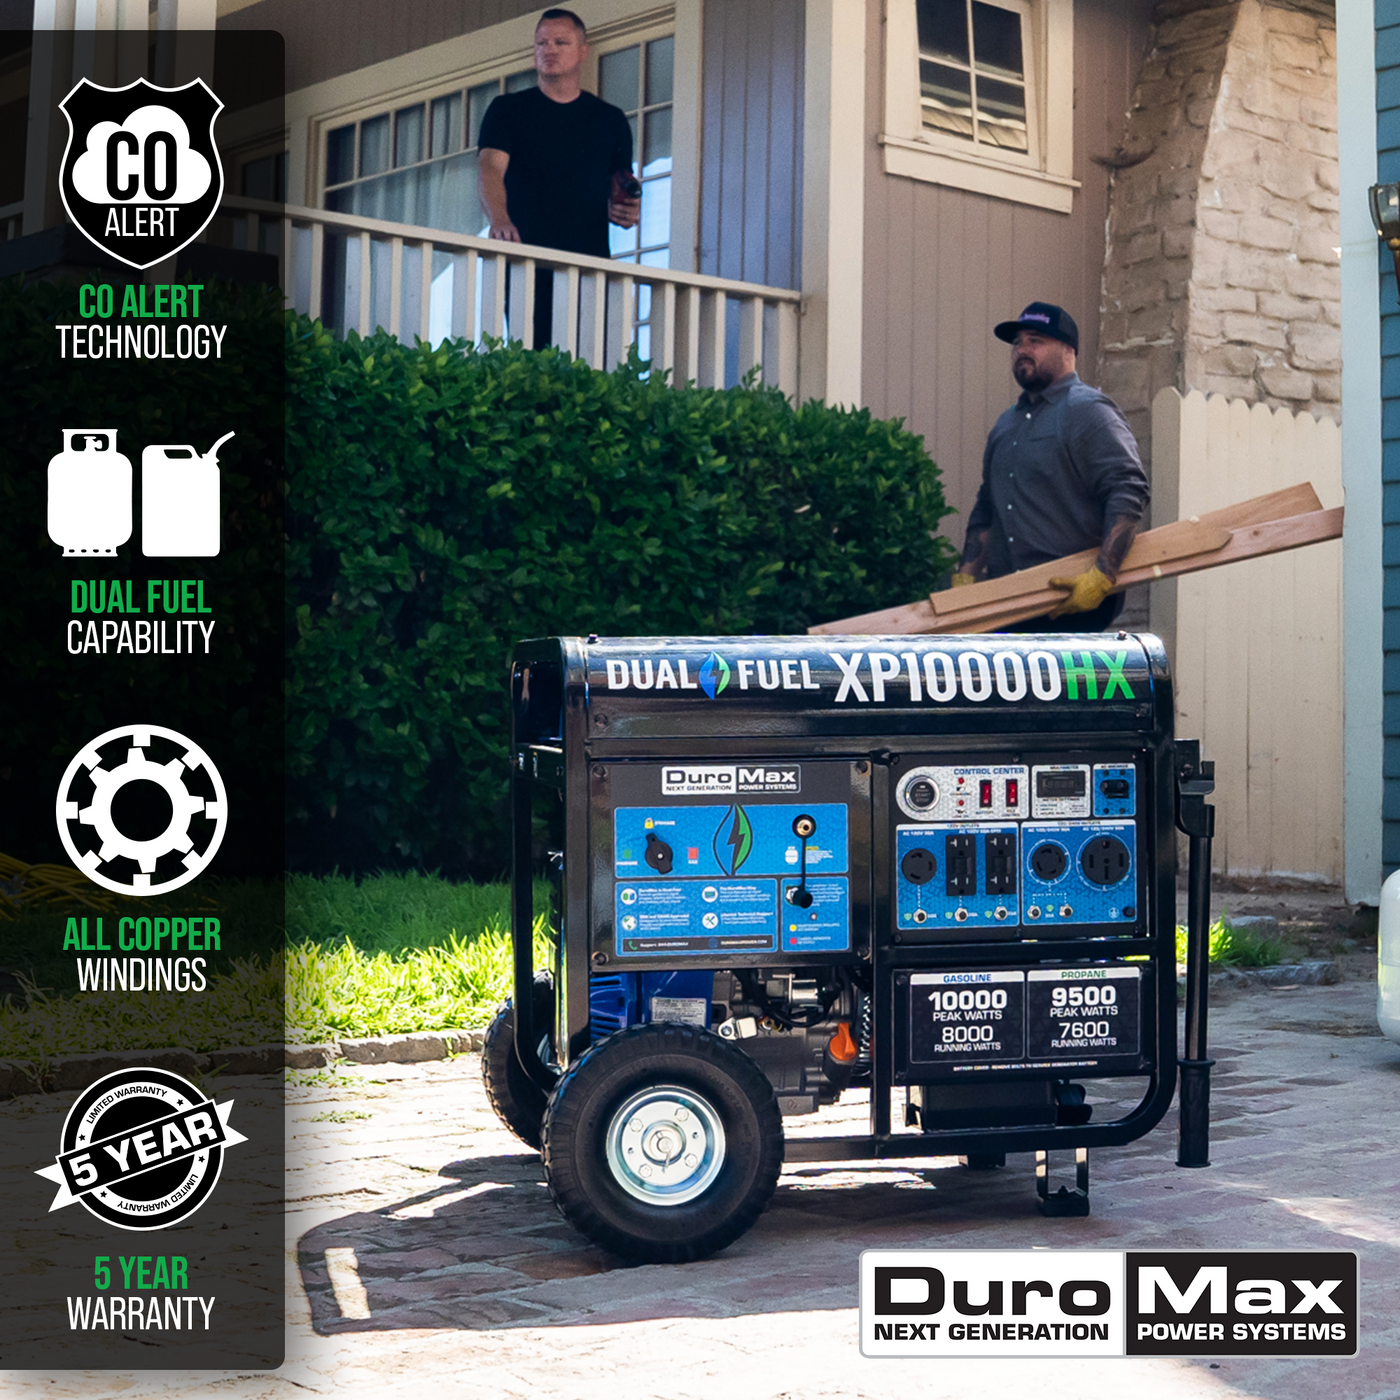 DuroMax XP10000HX 10,000 Watt Portable Dual Fuel Gas Propane CO Alert Generator